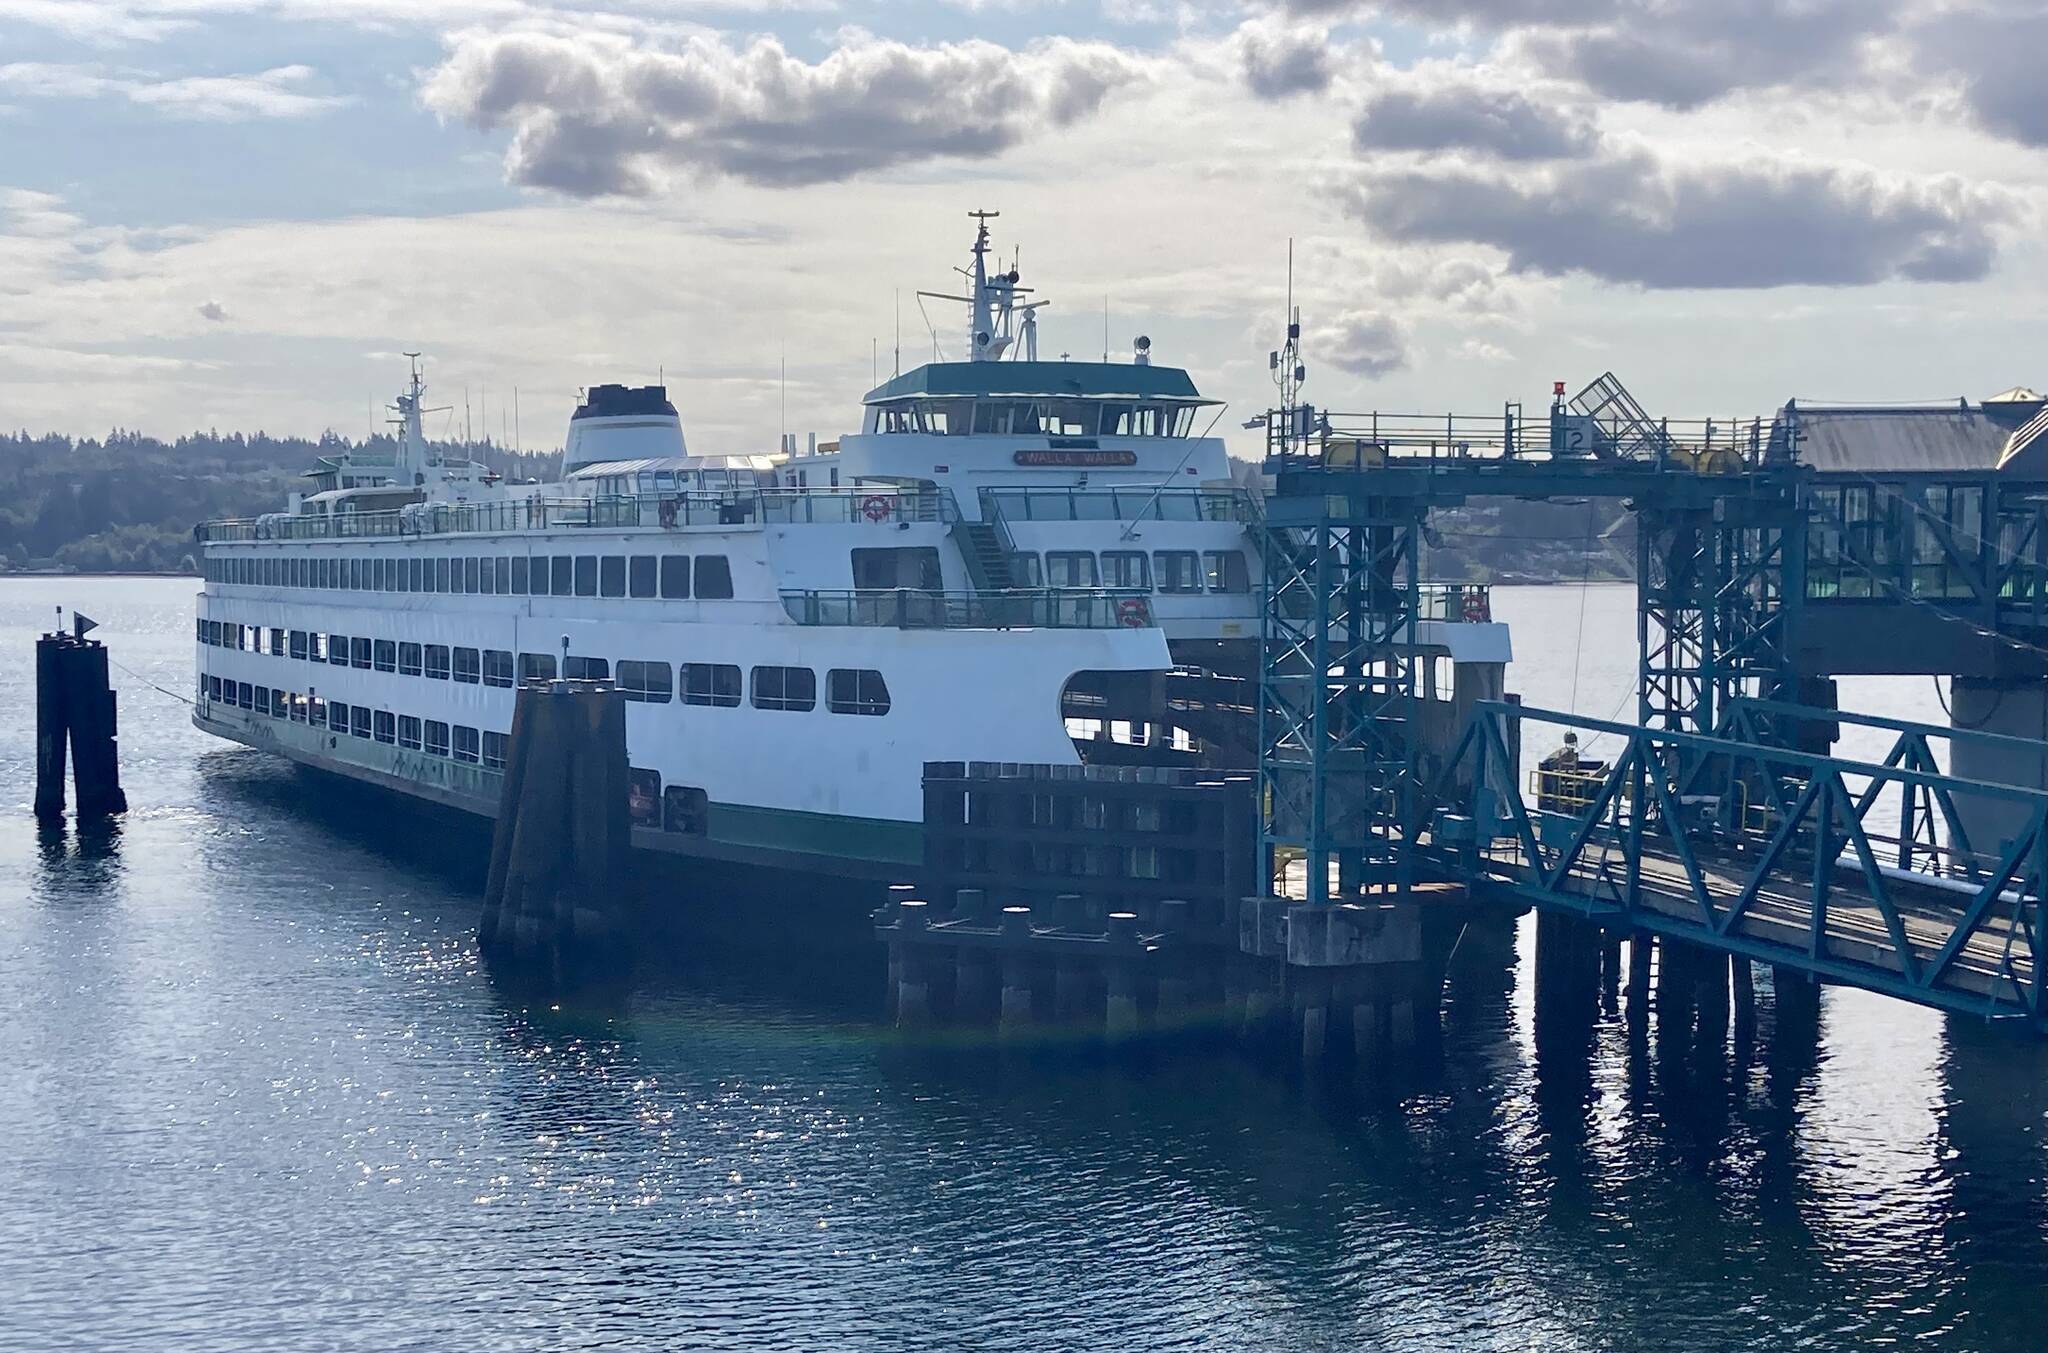 Elisha Meyer/Kitsap News Group
The M/V Walla Walla remains docked in Bremerton, out of service for repairs.